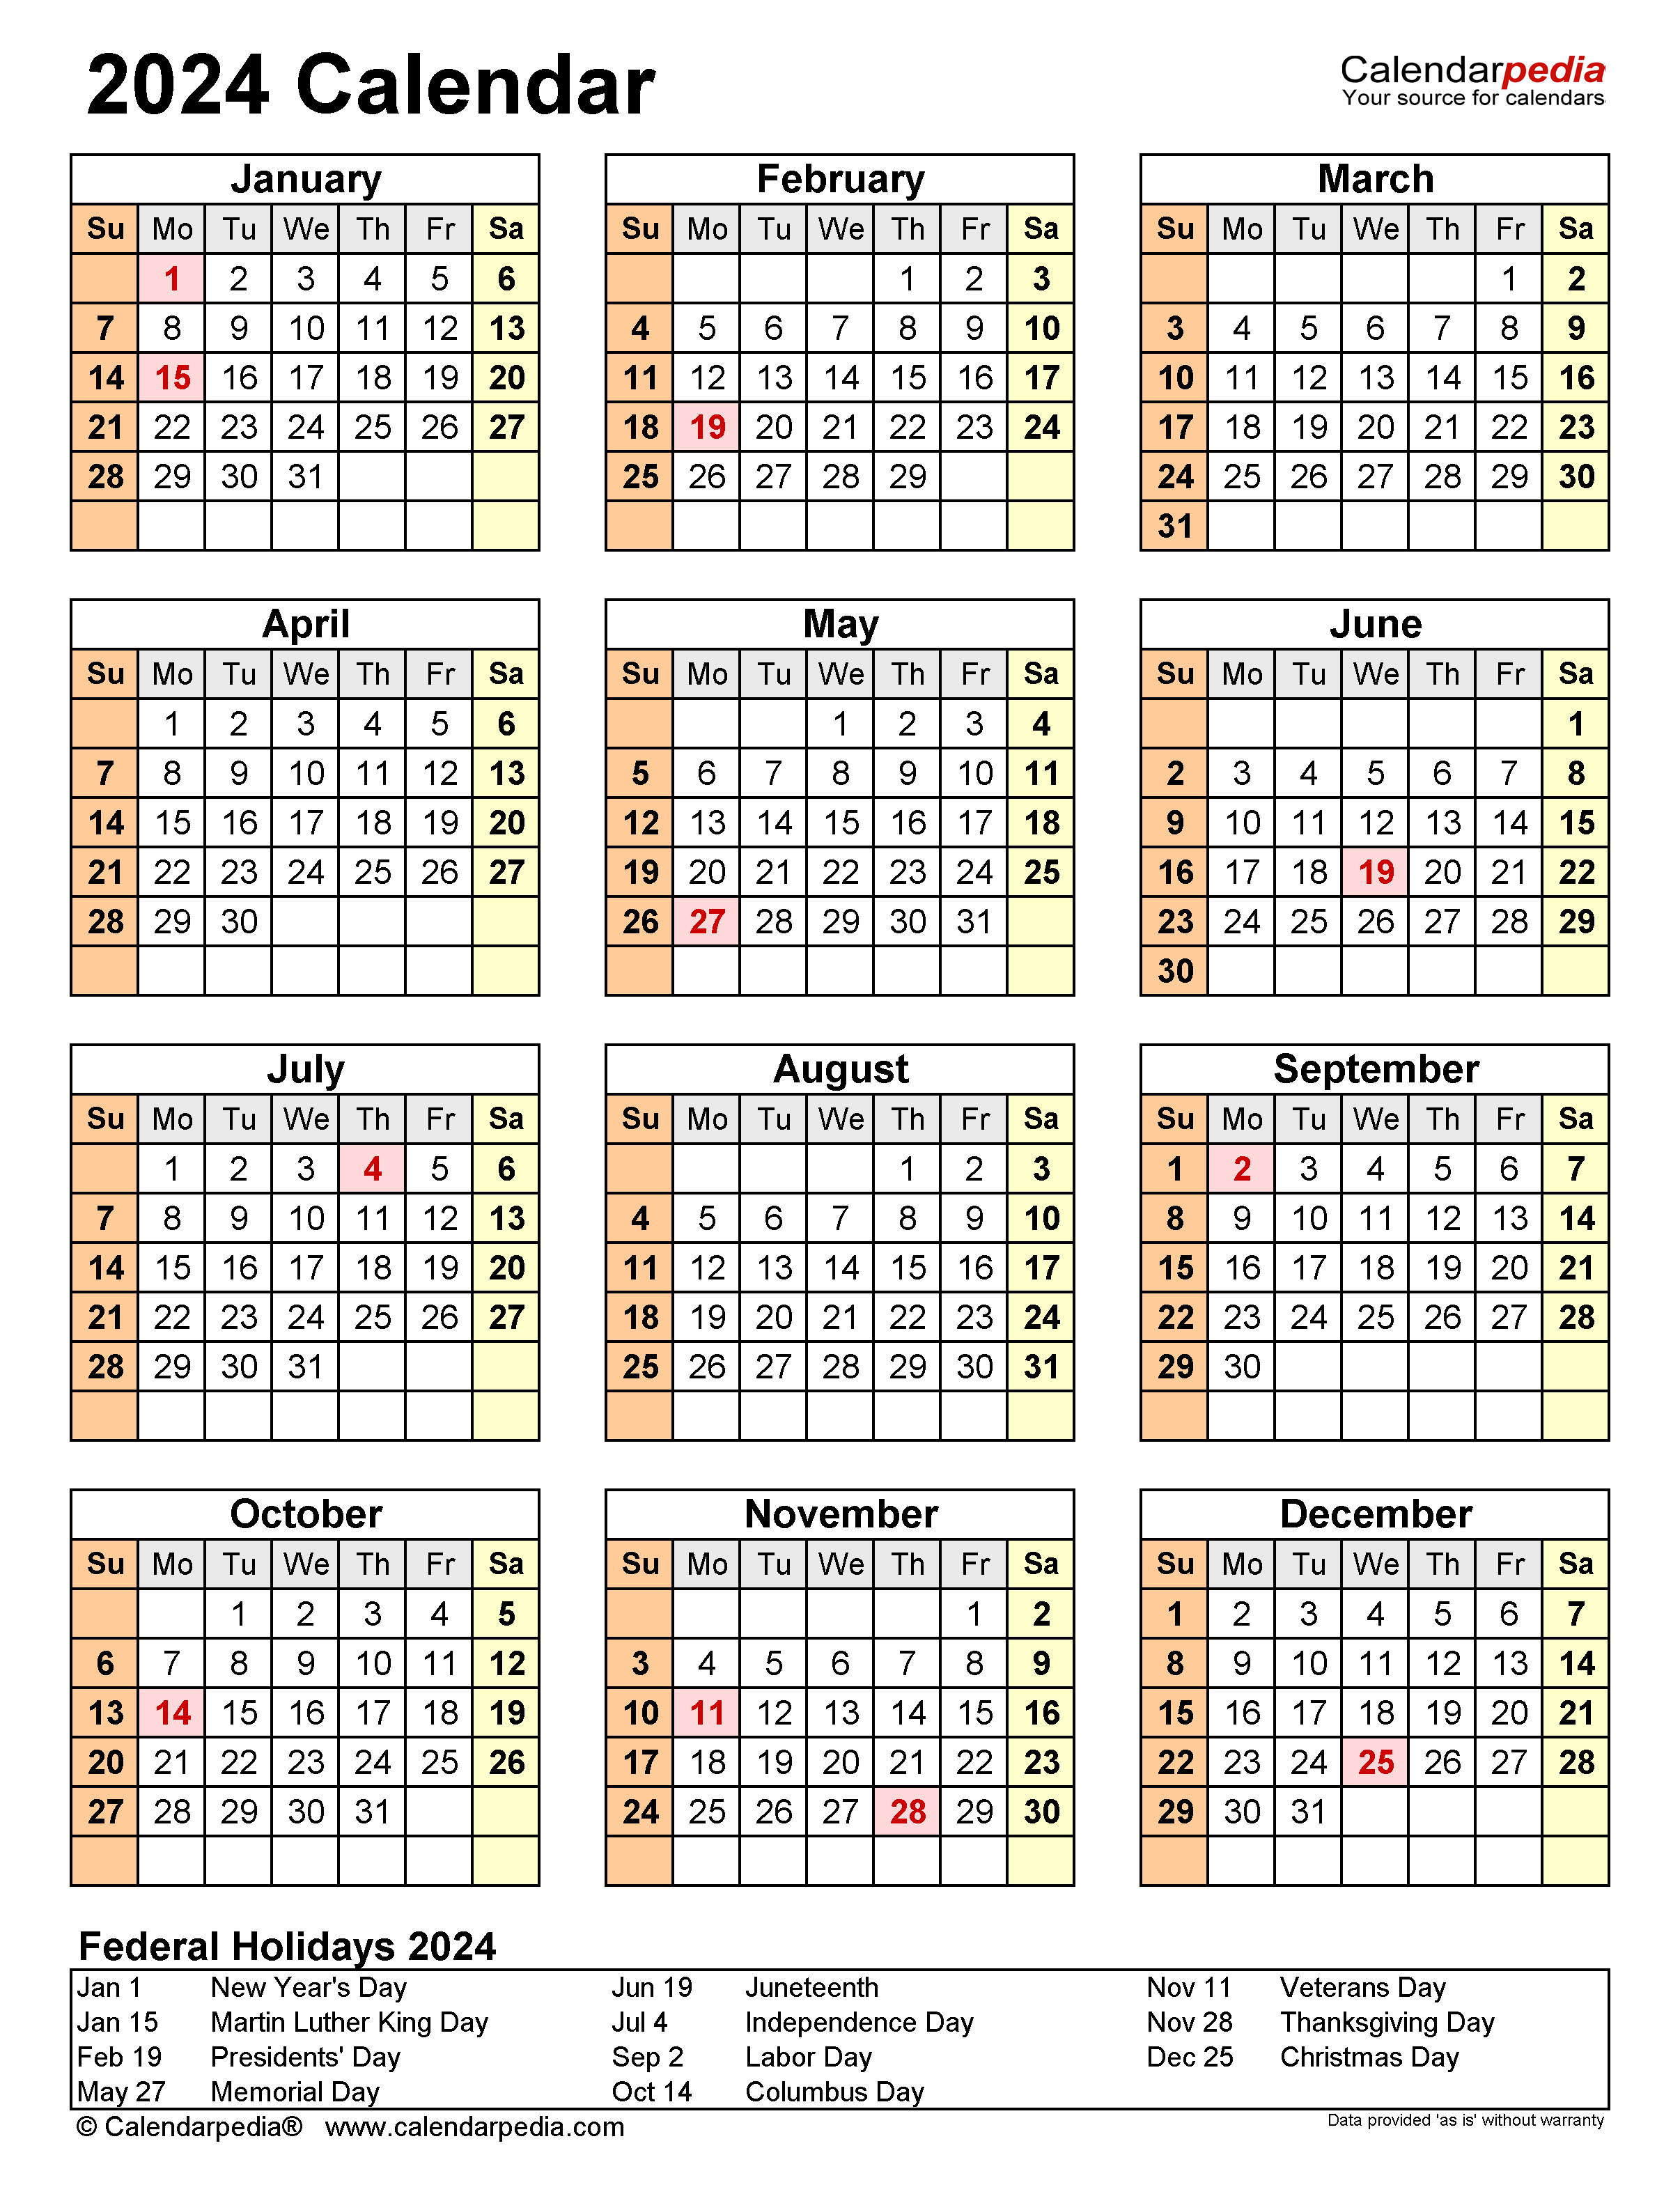 2024 Calendar - Free Printable Word Templates - Calendarpedia for 2024 Calendar With Holidays Printable Word Document